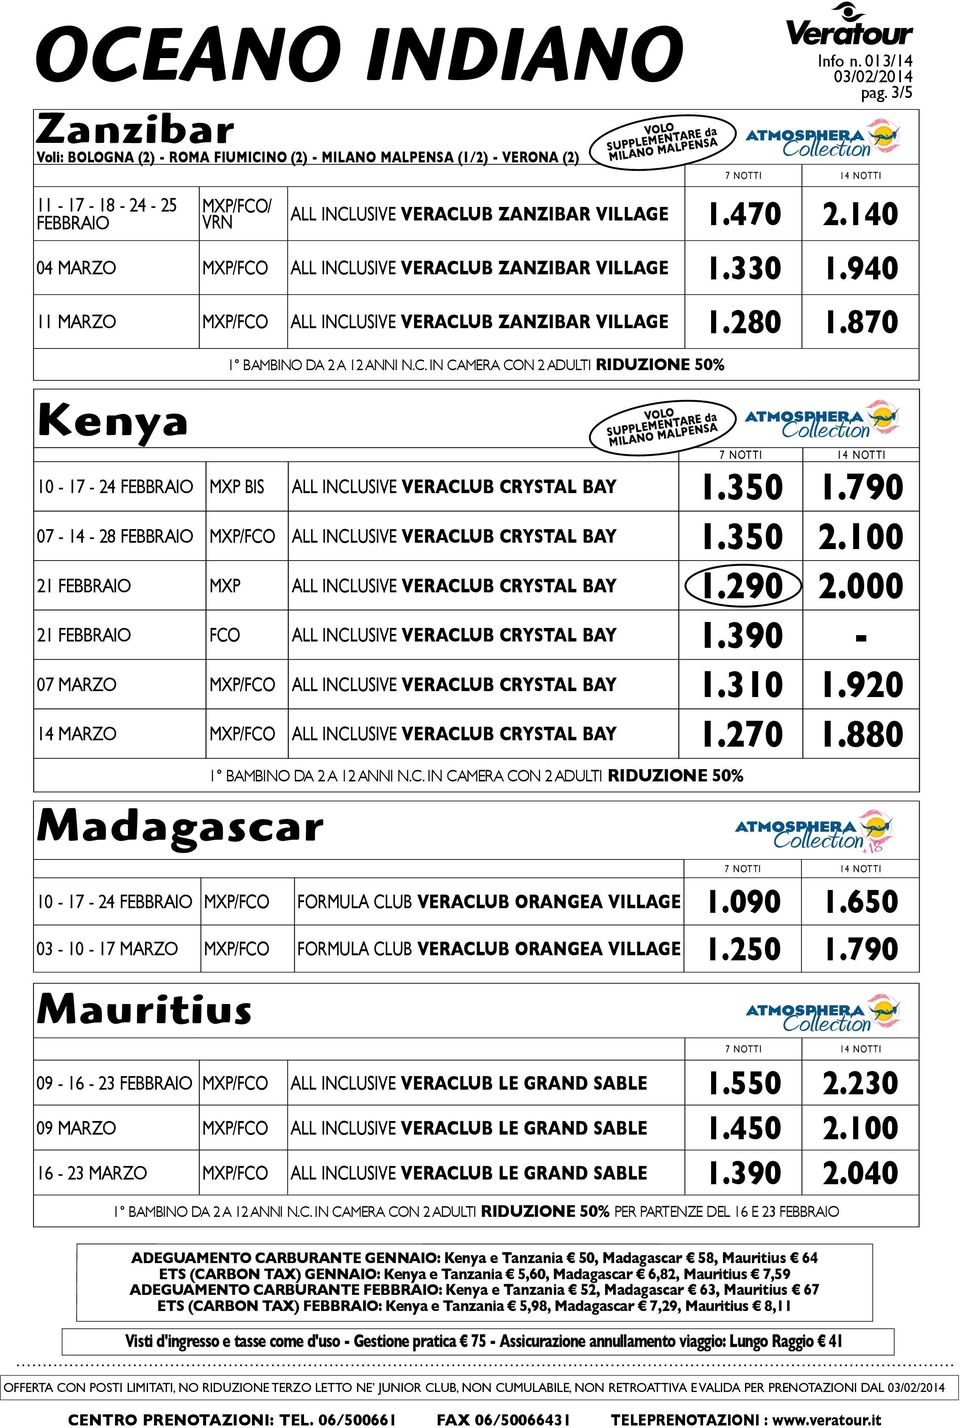 280 1.870 Kenya 10-17 - 24 FEBBRAIO MXP BIS ALL INCLUSIVE VERACLUB CRYSTAL BAY 1.350 1.790 07-14 - 28 FEBBRAIO MXP/FCO ALL INCLUSIVE VERACLUB CRYSTAL BAY 1.350 2.